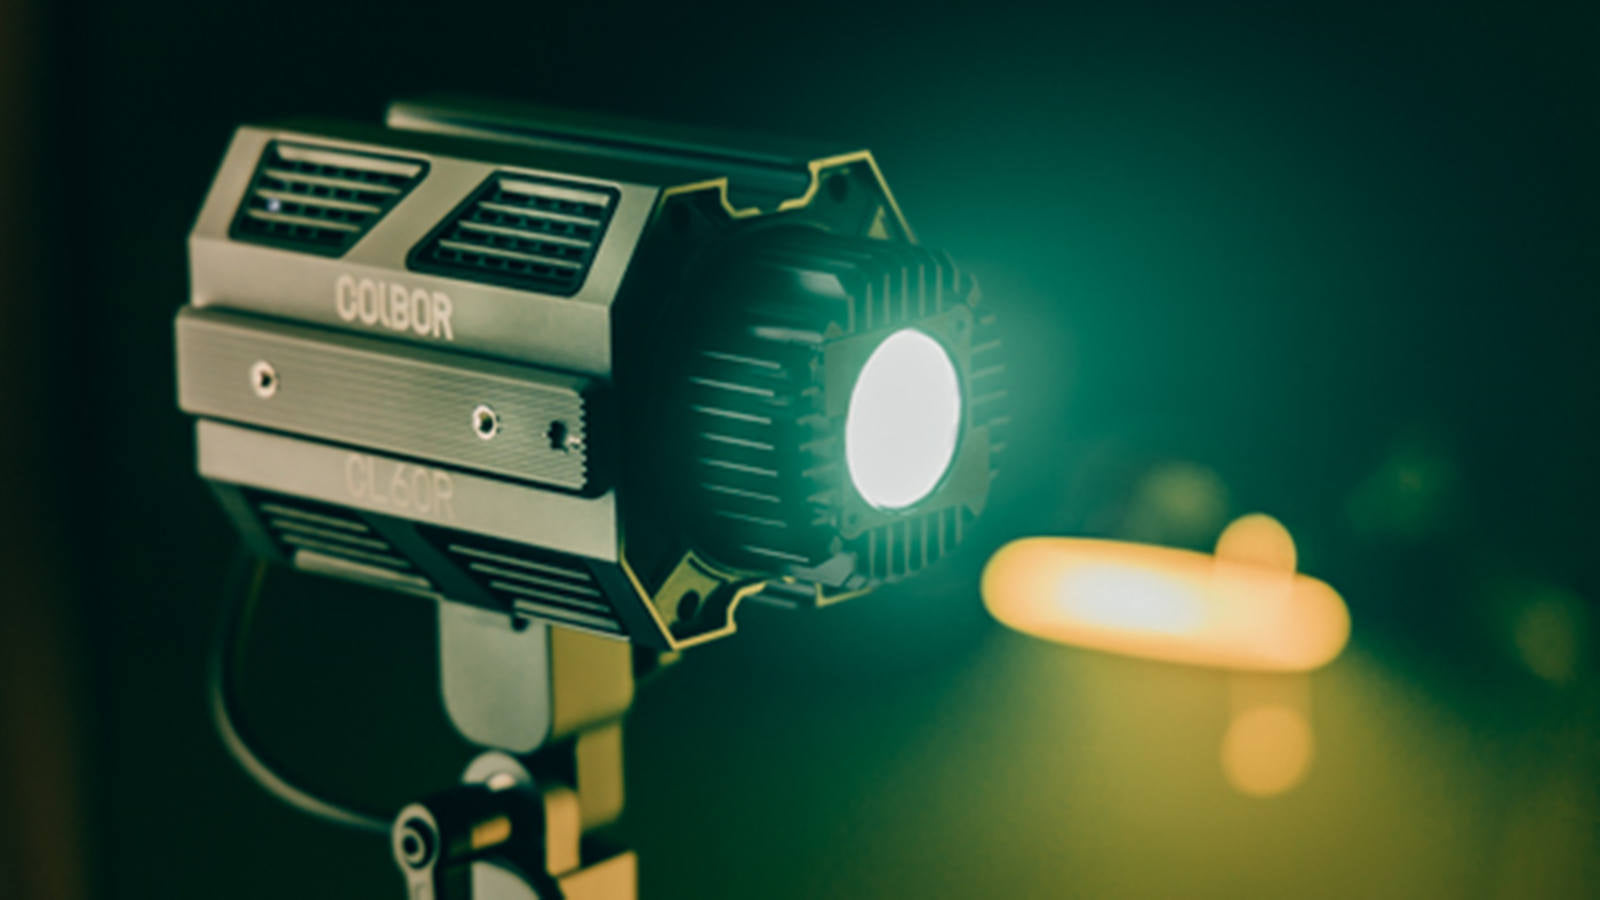 Guide to film studio lighting